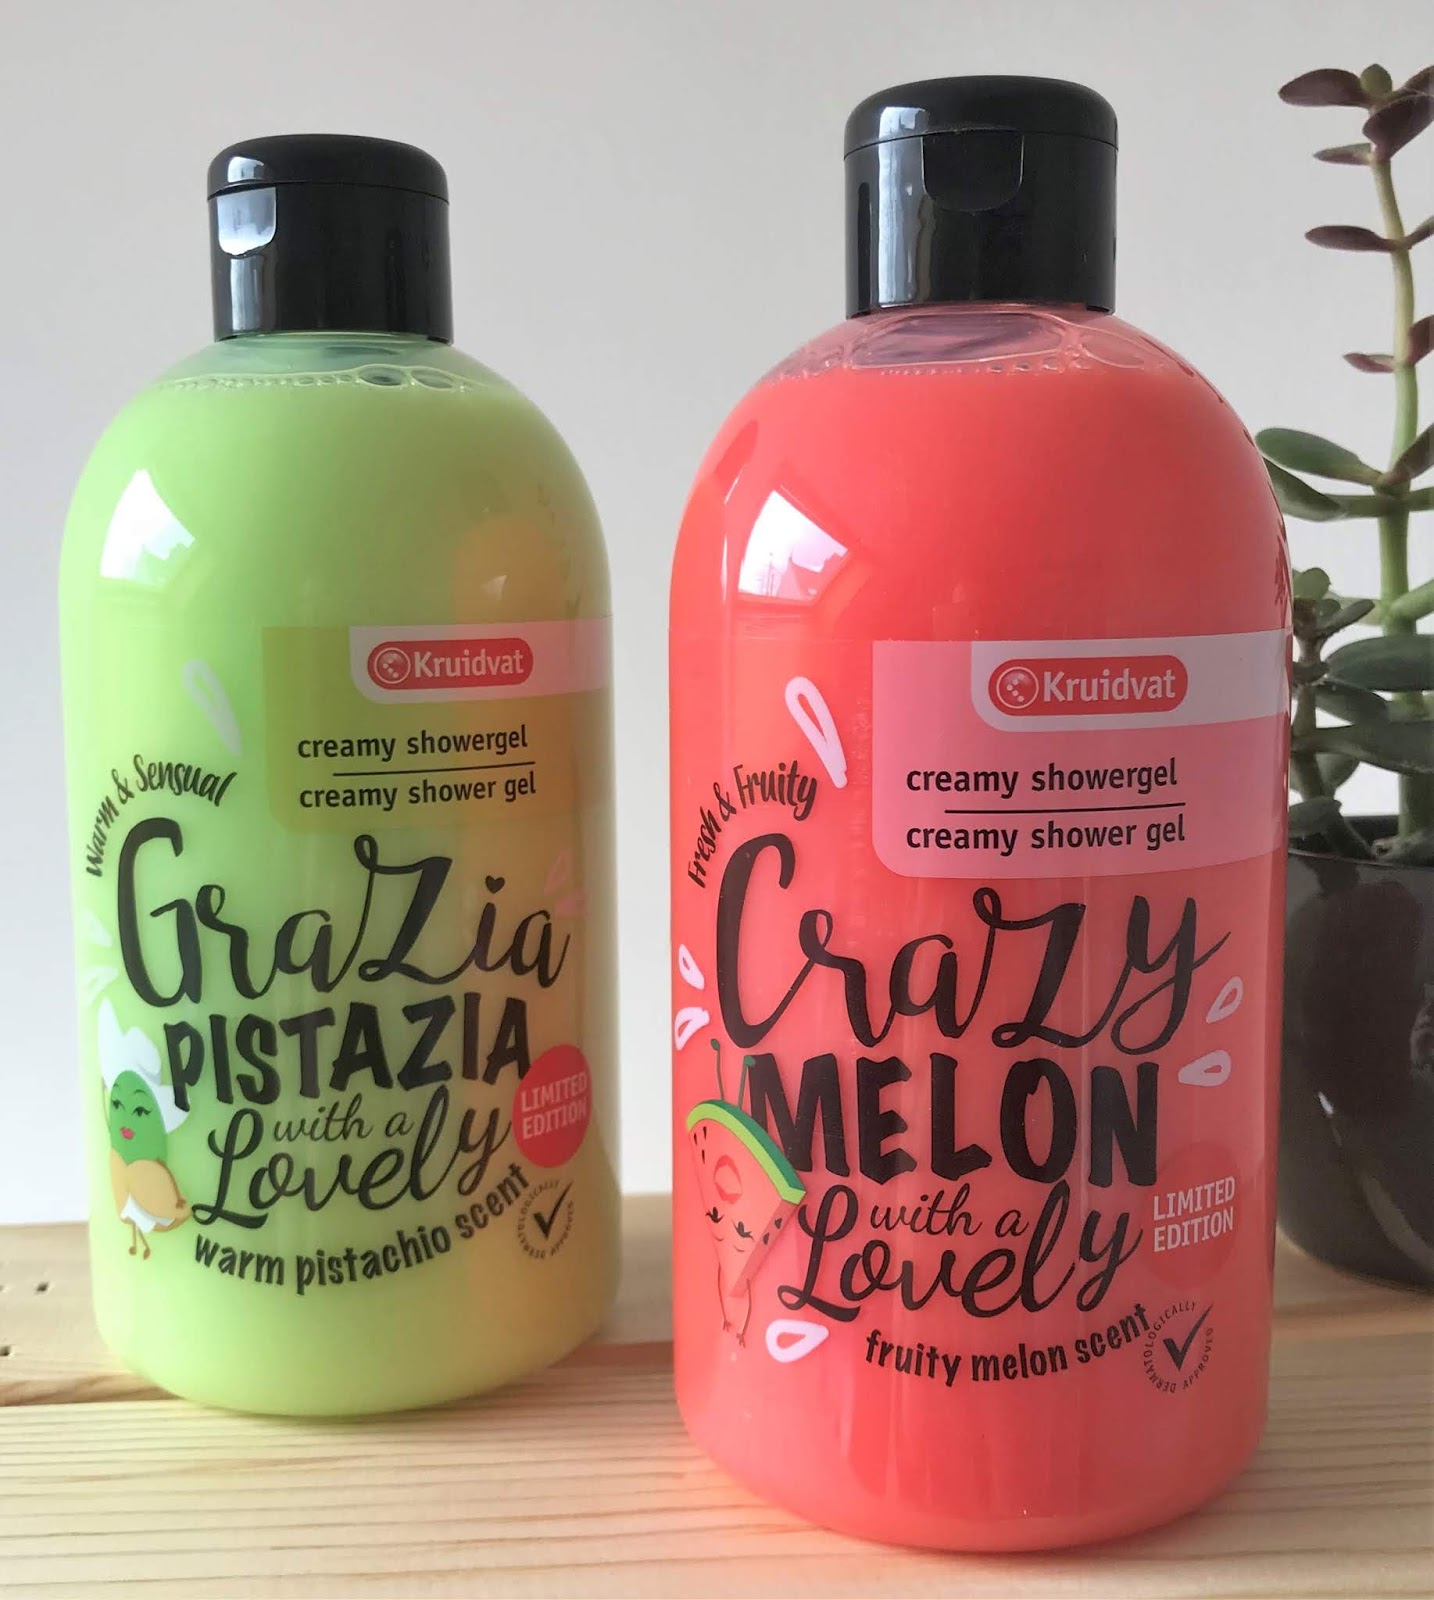 Kruidvat | Grazia Pistazia & Crazy Melon Shower Gel